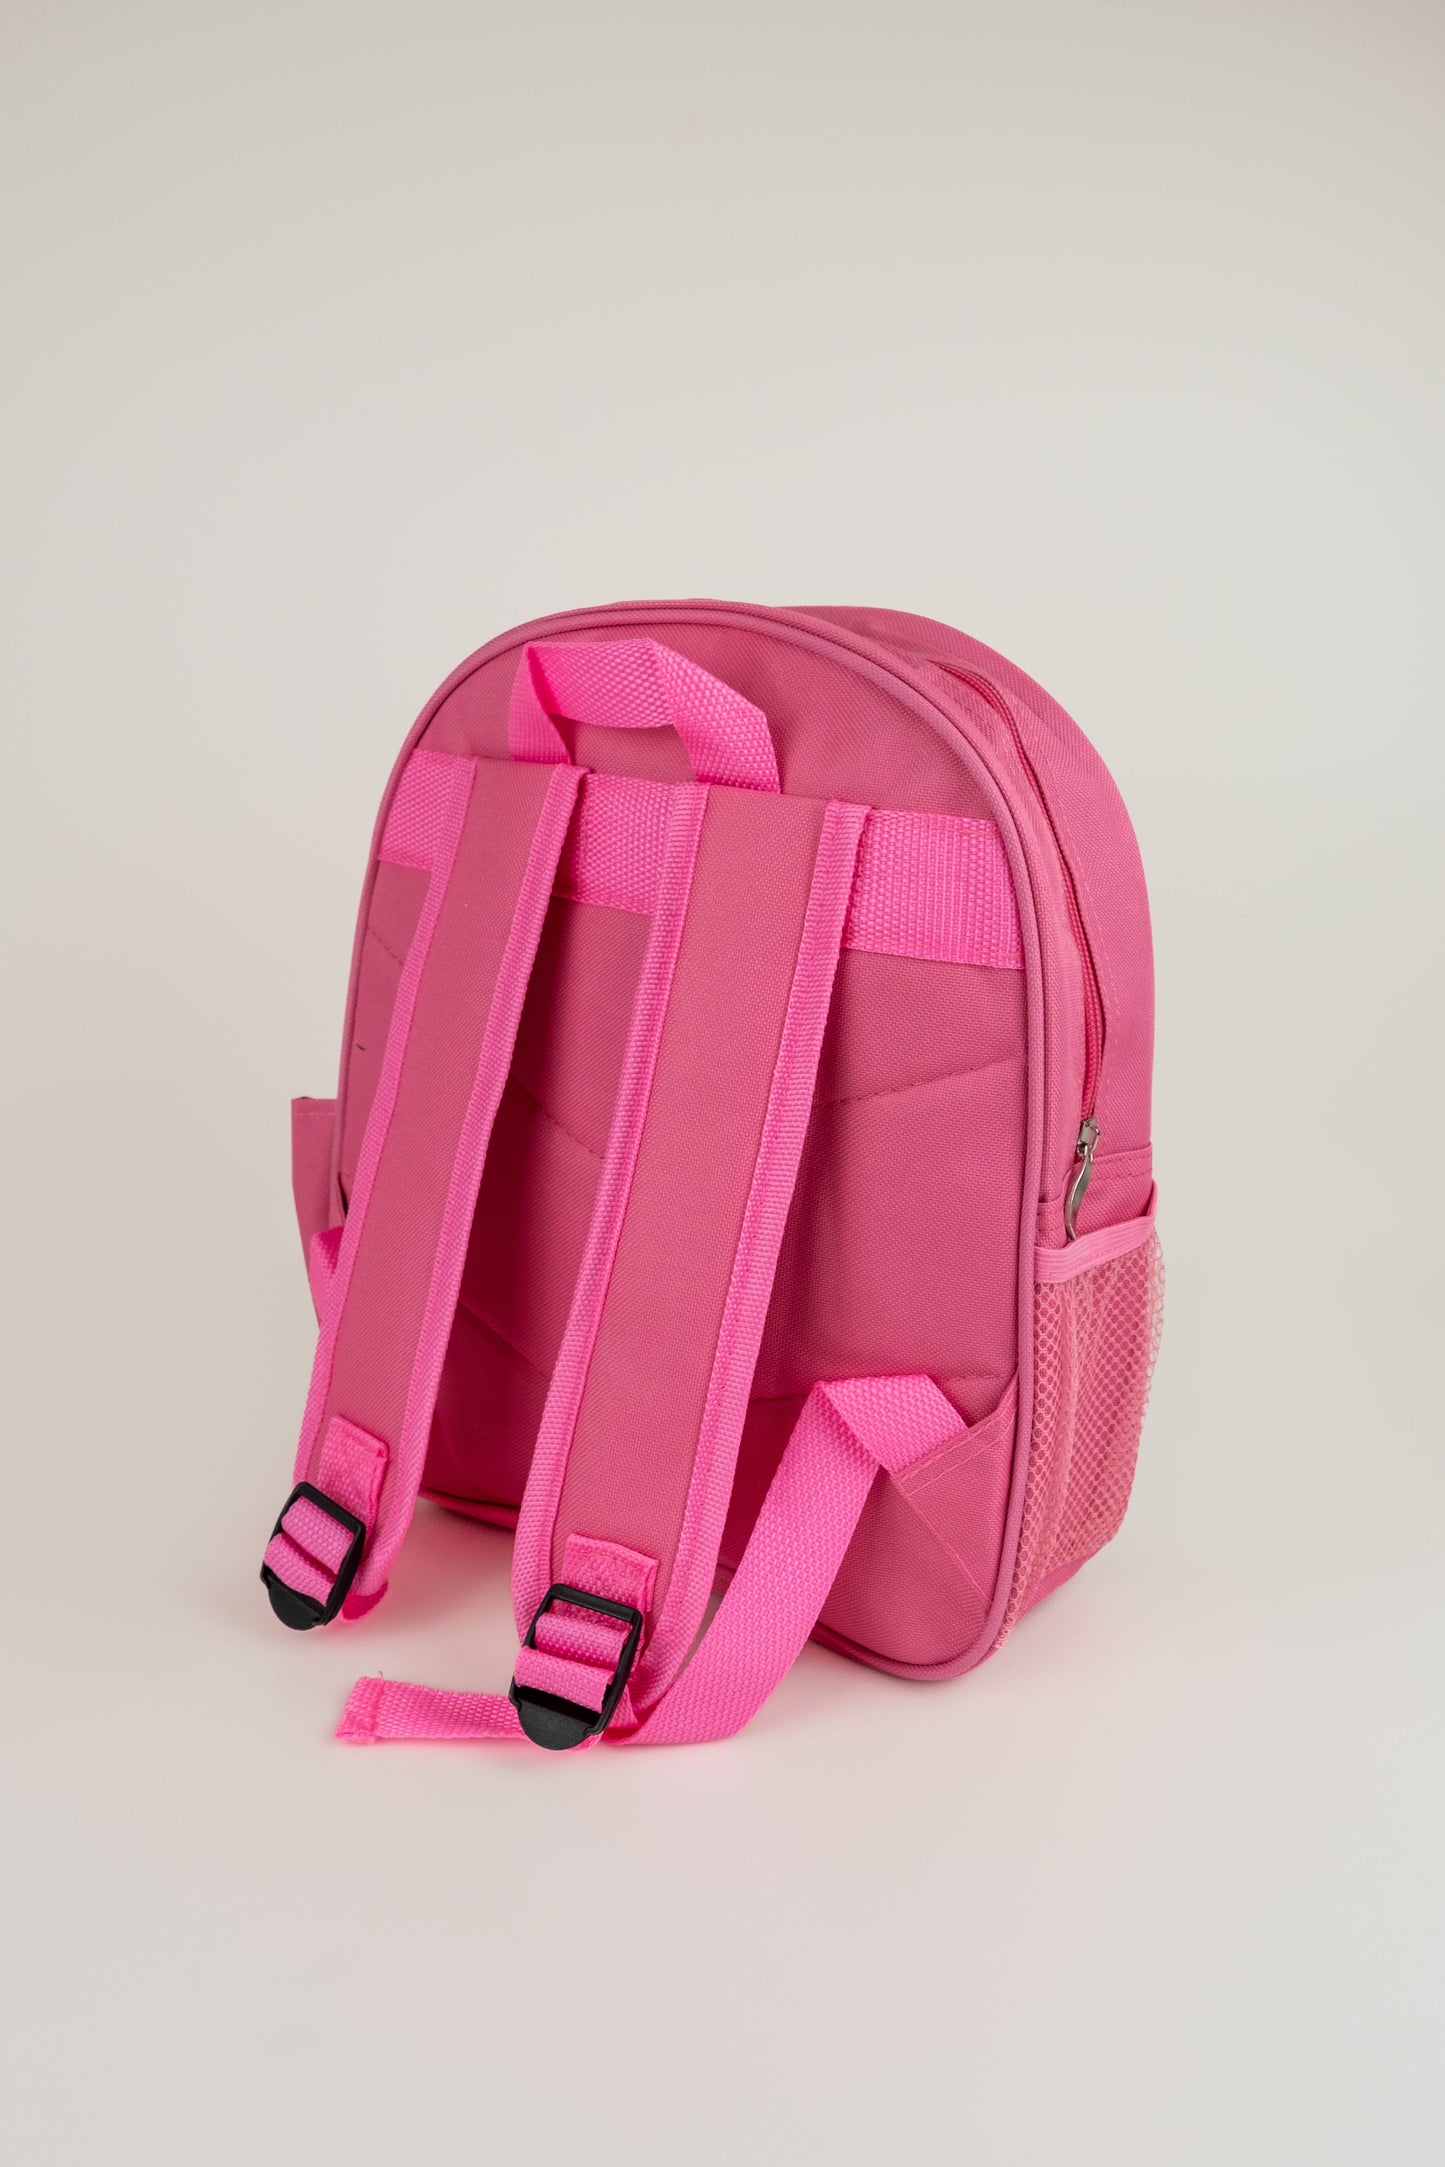 Children’s Personalised Backpack - Gaming Design - Black